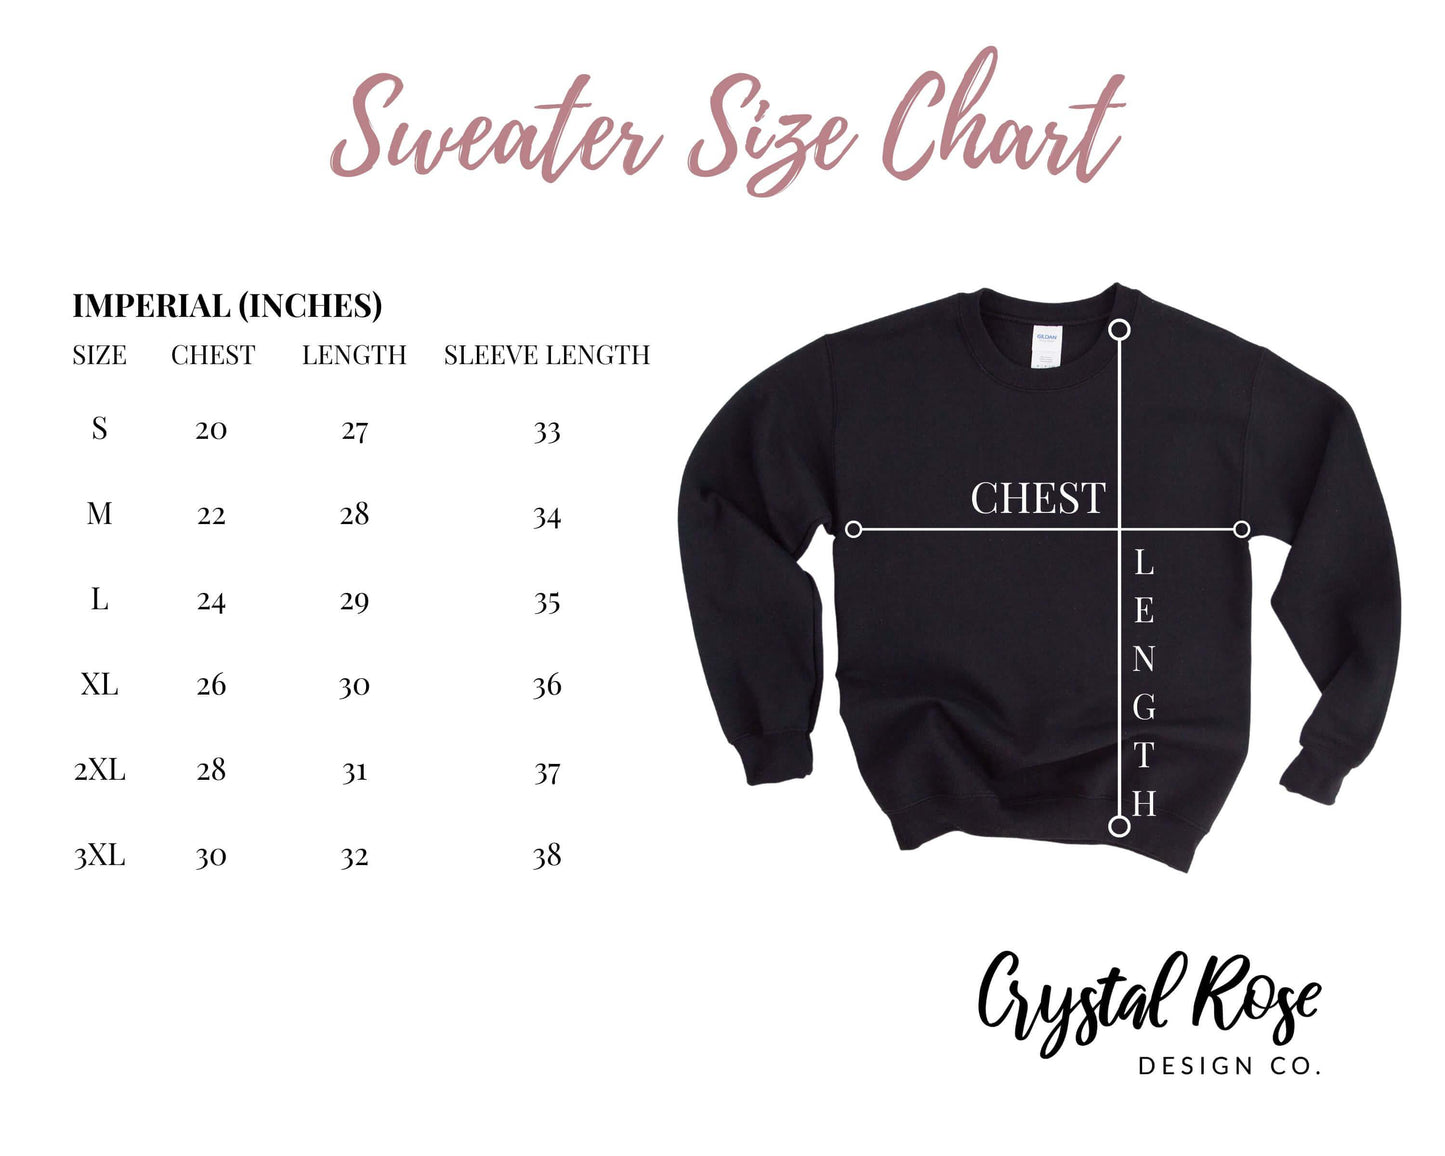 Merry Teacher Christmas Crewneck Sweater - Crystal Rose Design Co.